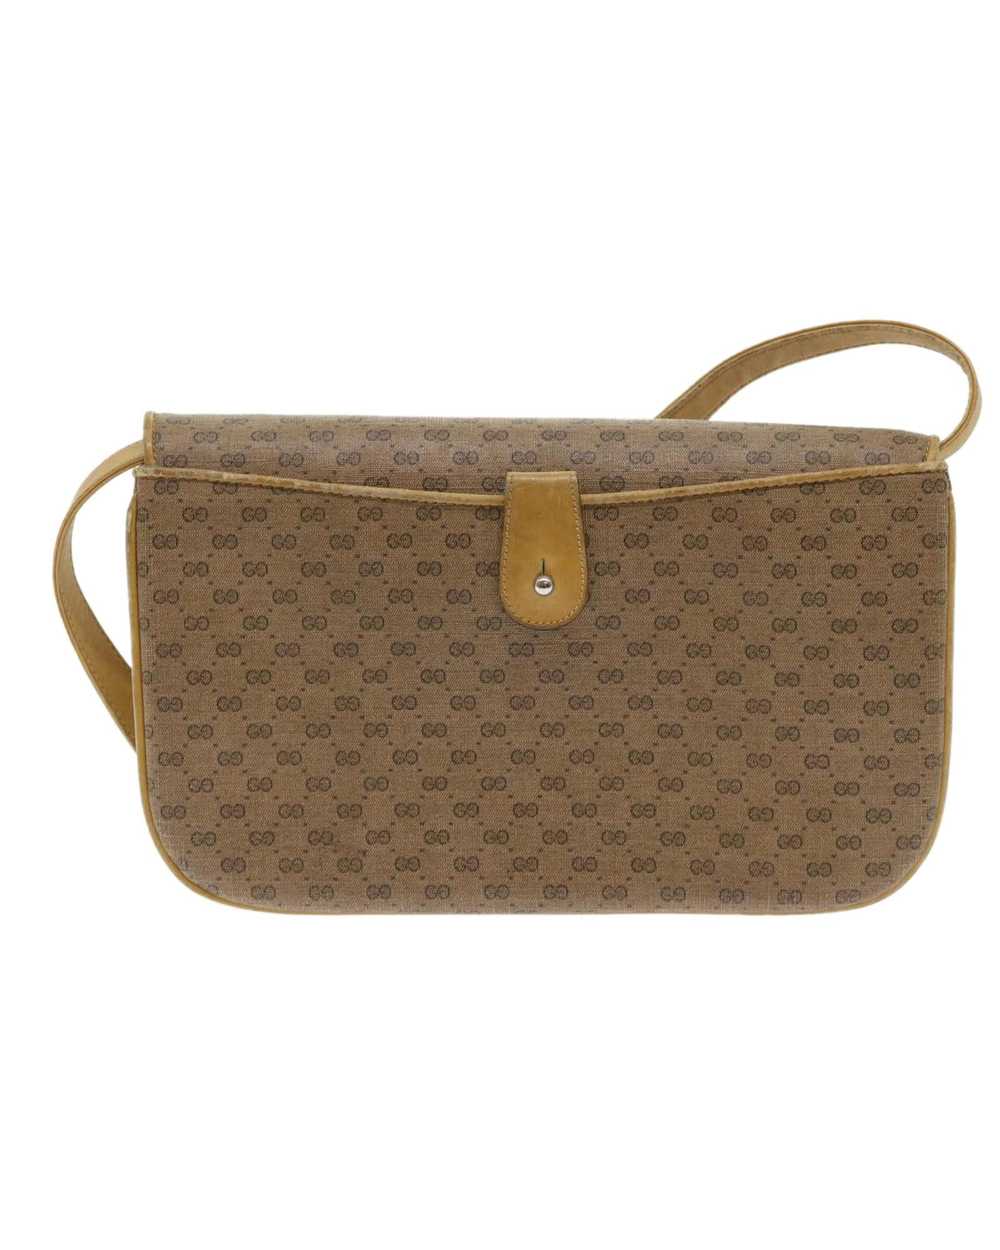 Gucci Luxury Gucci Beige Canvas Shoulder Bag - image 3